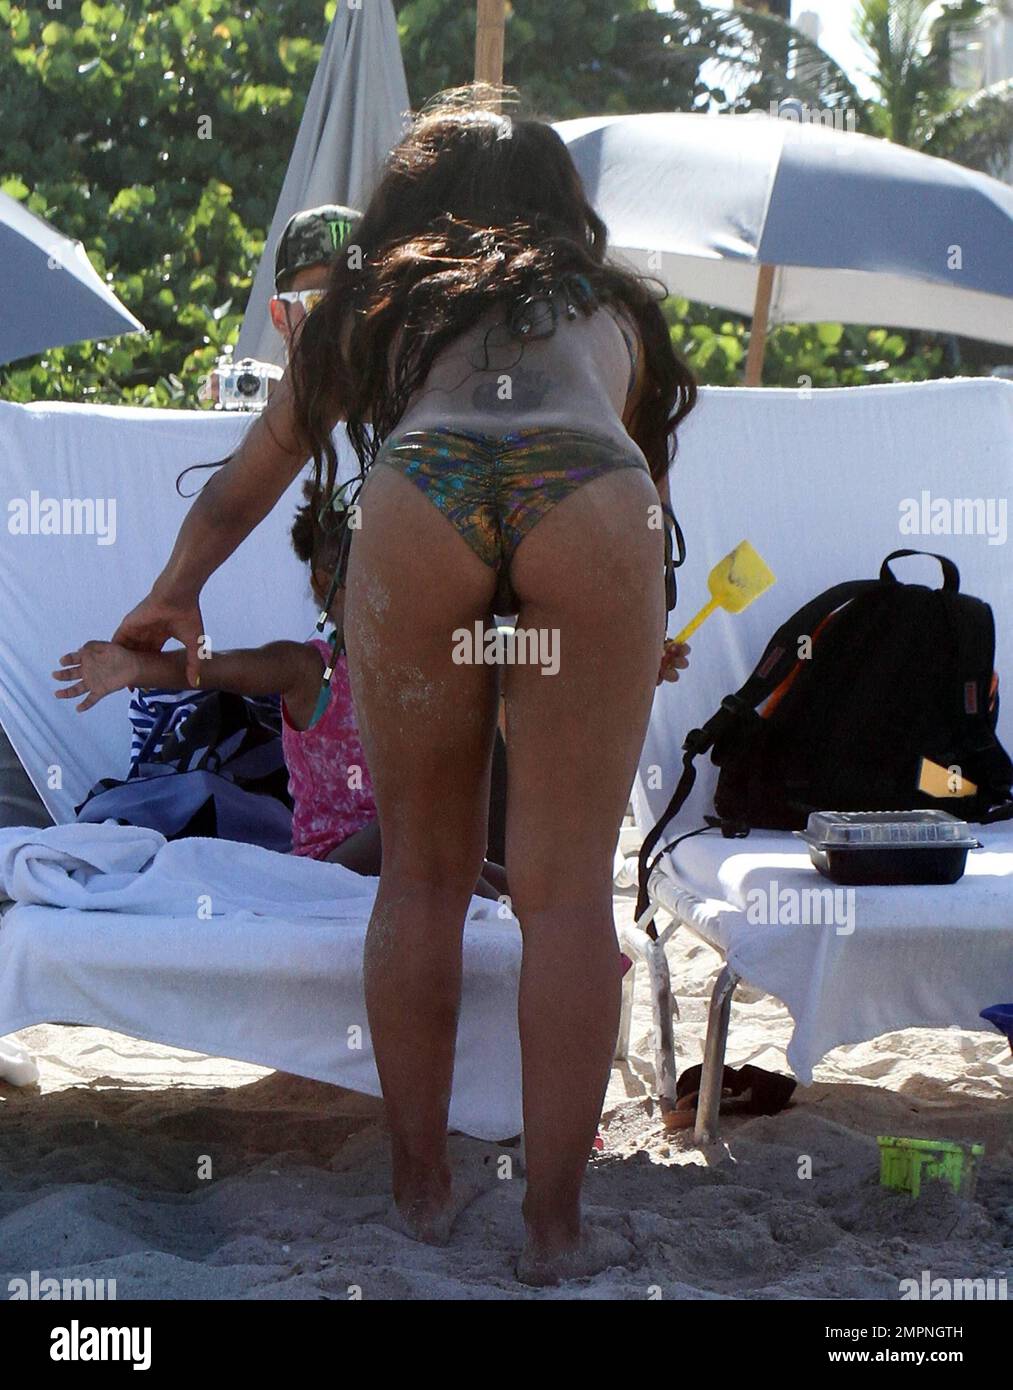 Christina milian bikini hi-res stock photography and images - Alamy